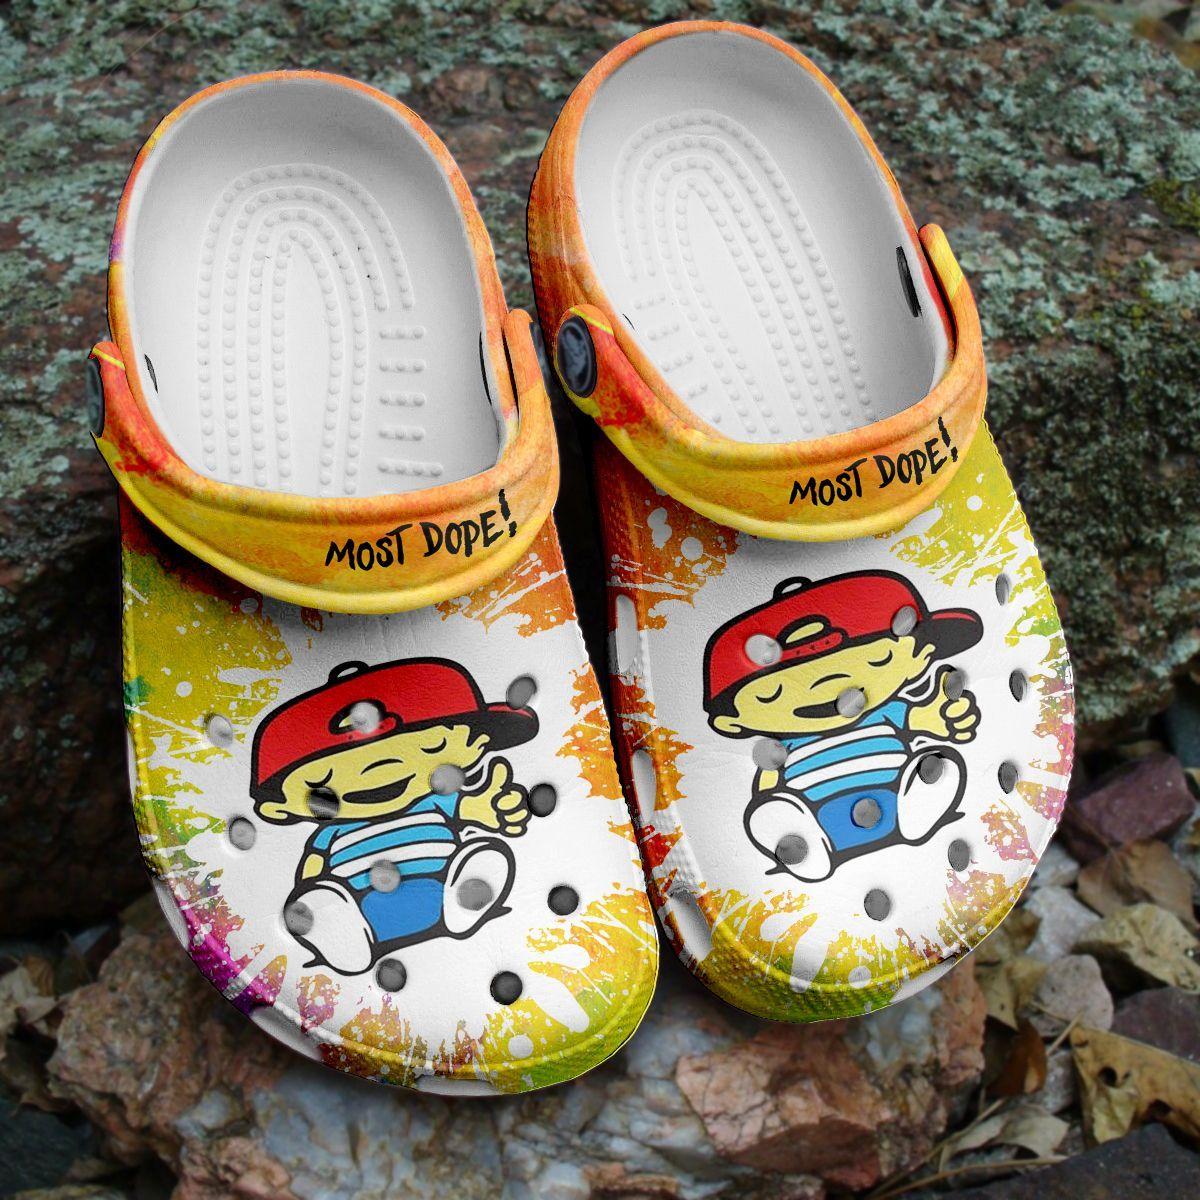 Funny Kids Mac Miller Crocs Shoes